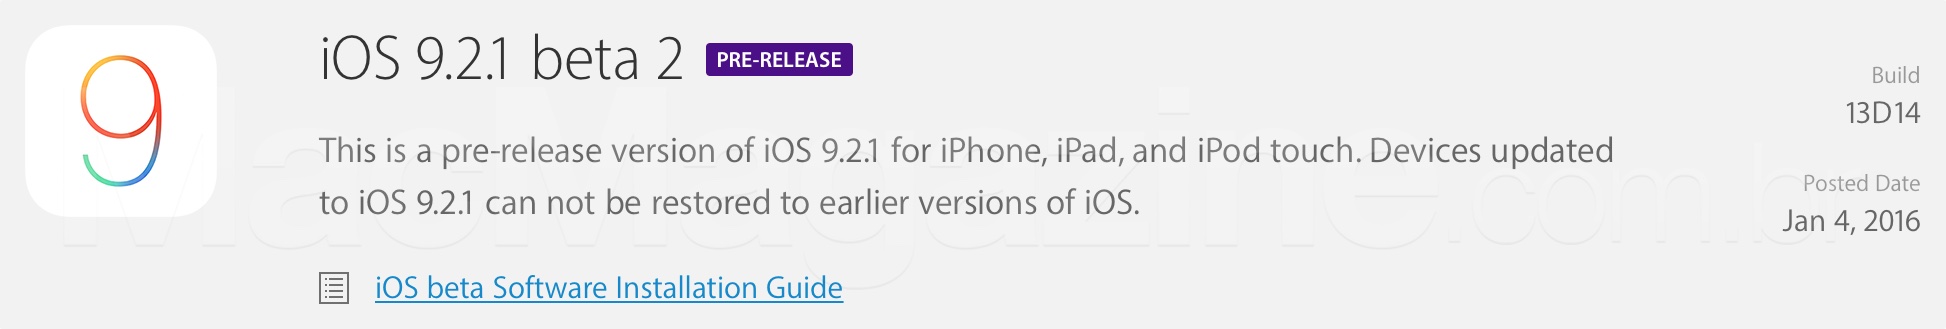 iOS 9.2.1 beta 2